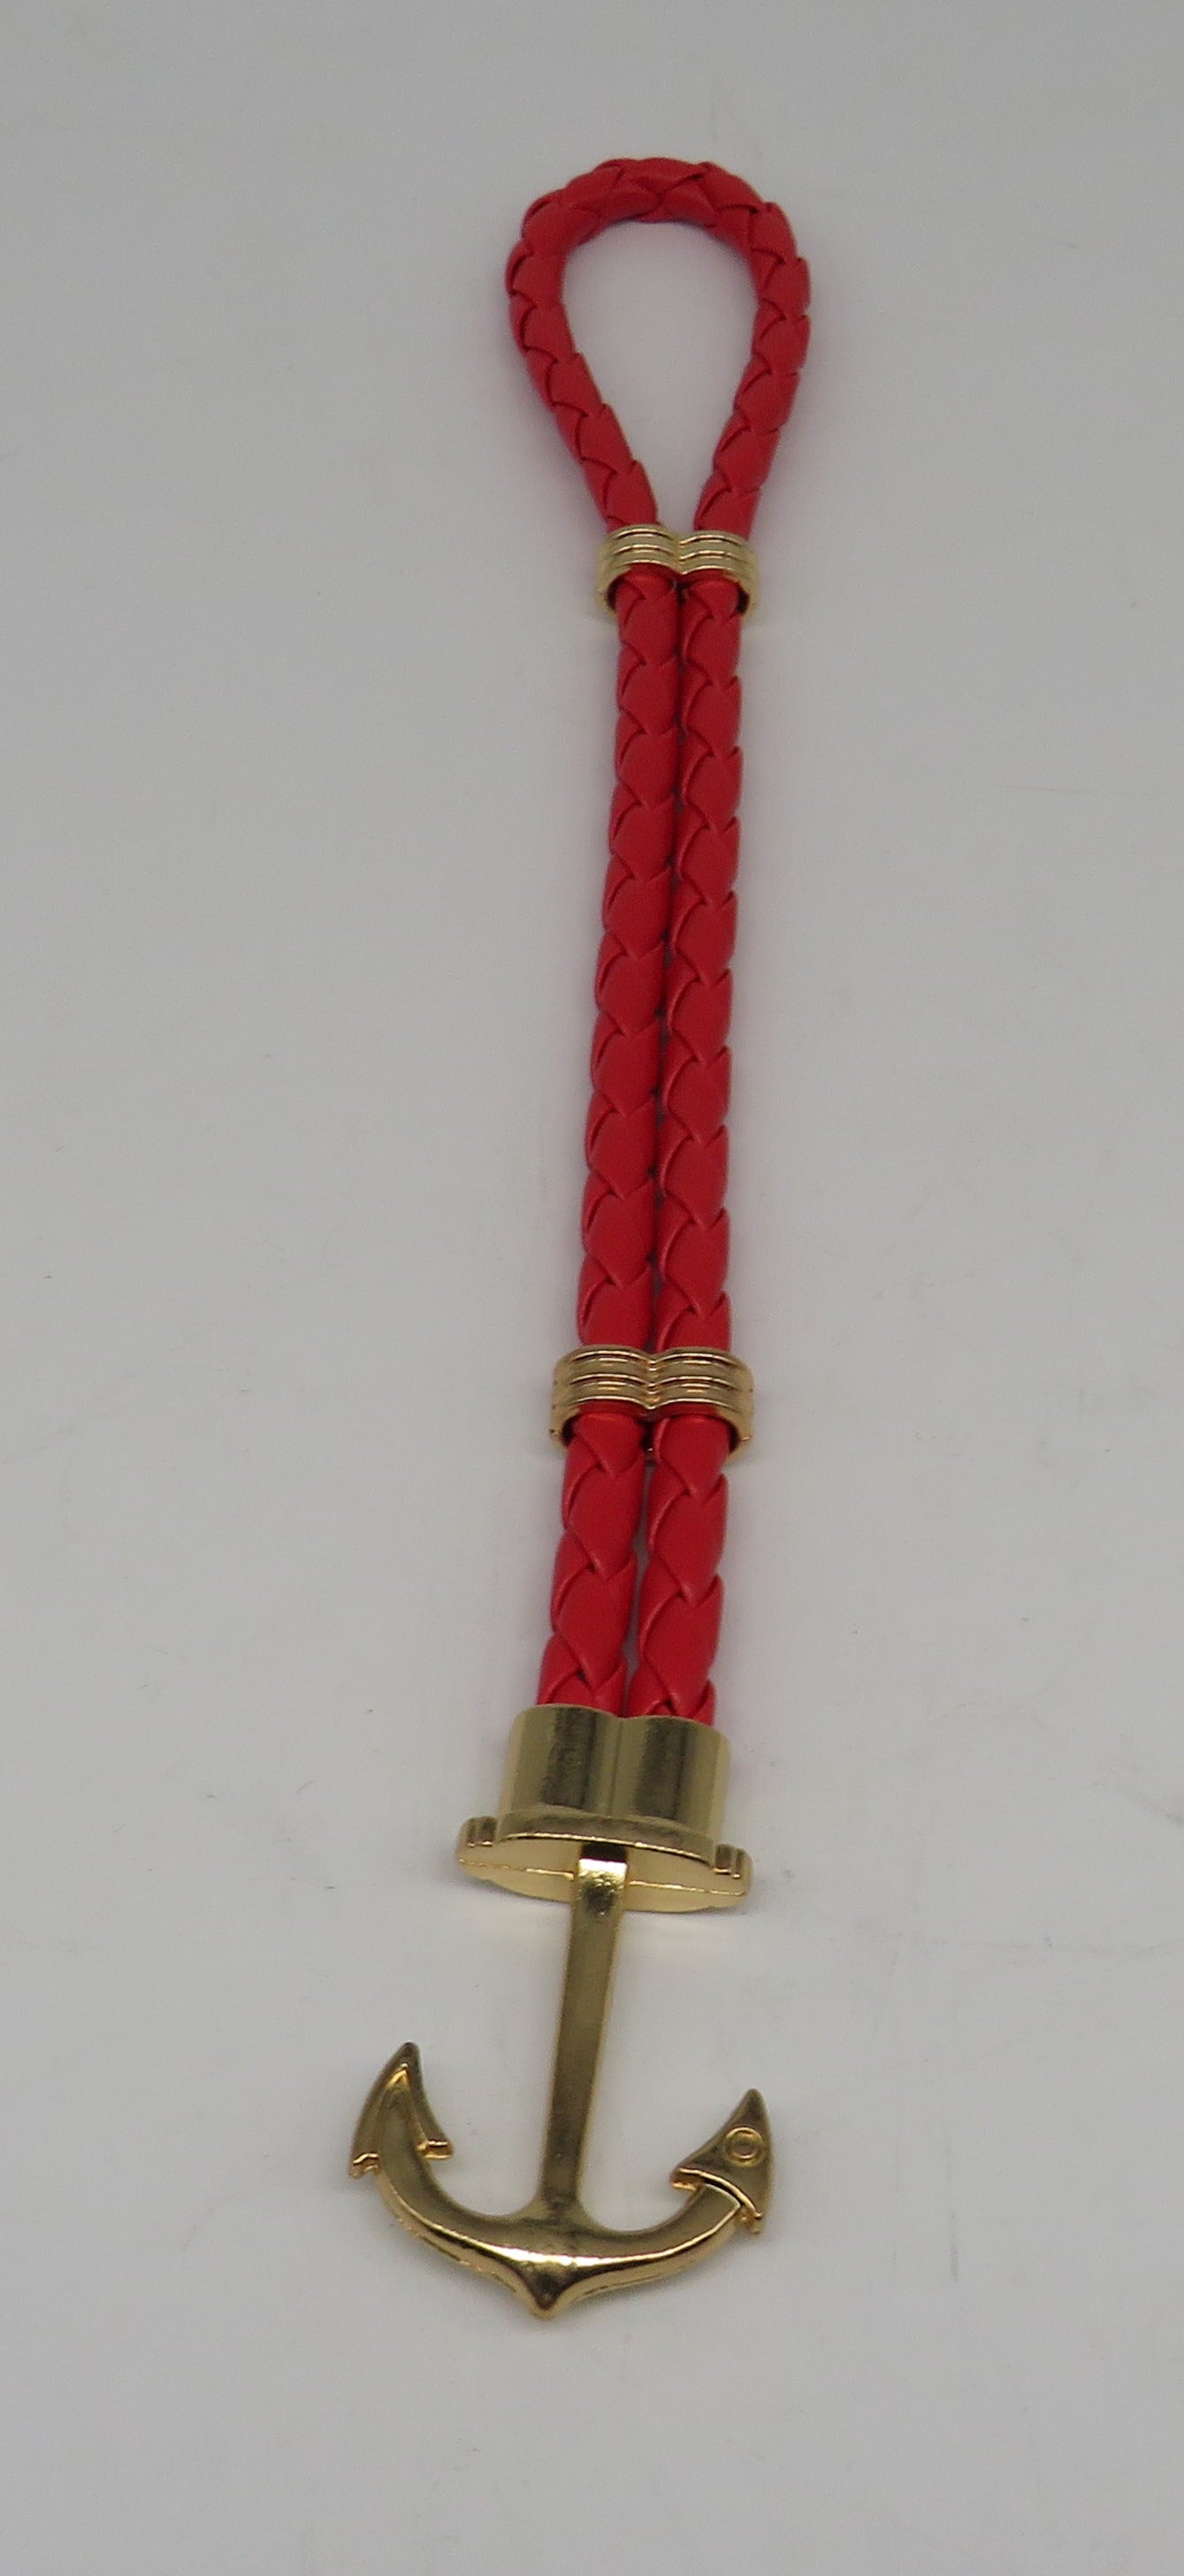 Unisex Leather Handmade Braided Cuff Anchor Bangle Bracelet Wristband Red-Gold